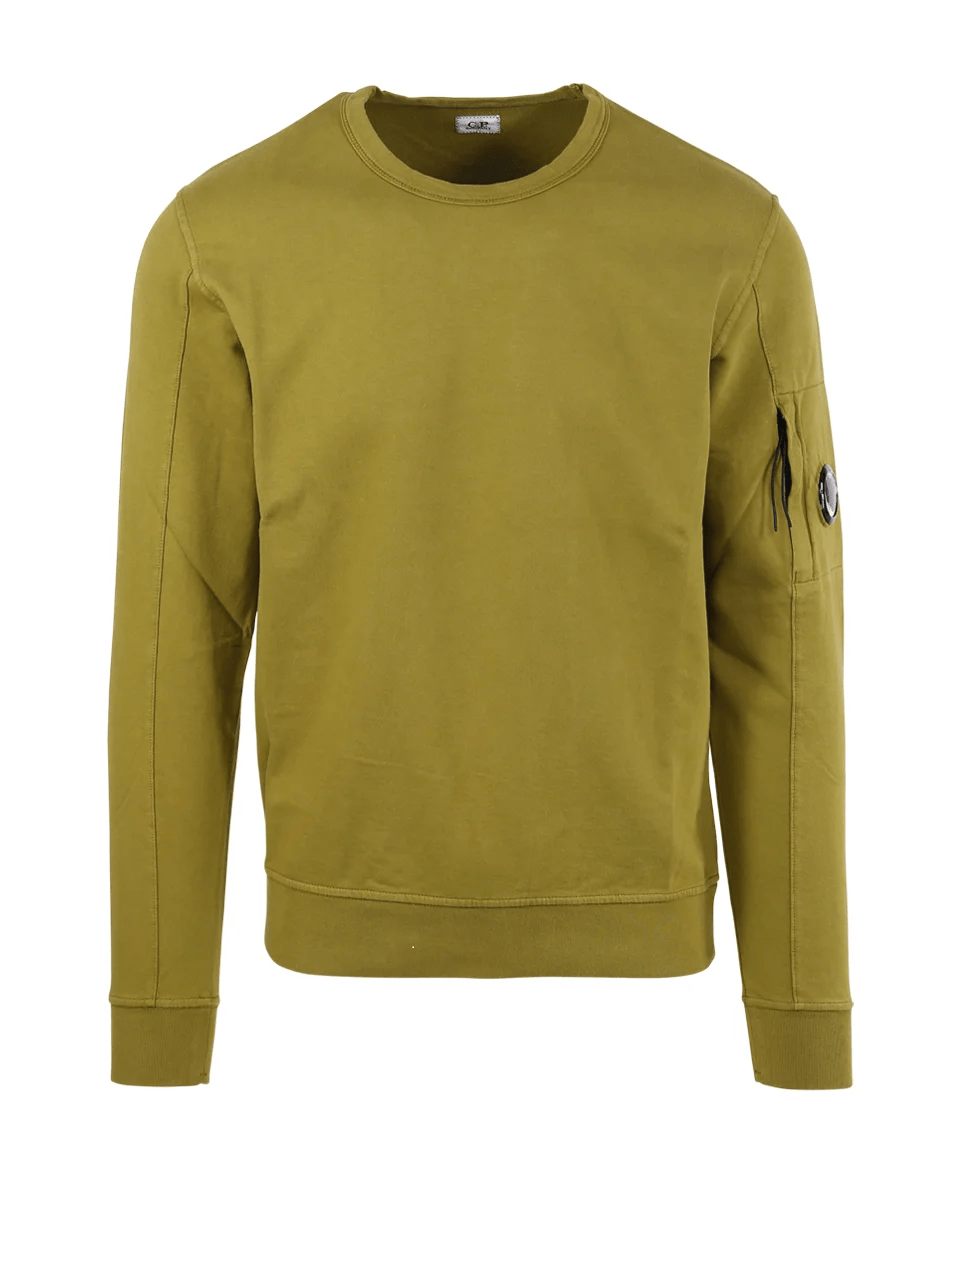 C.P. Company CMSS032A Light Fleece Sweatshirt - 249 Golden Palm - Escape Menswear